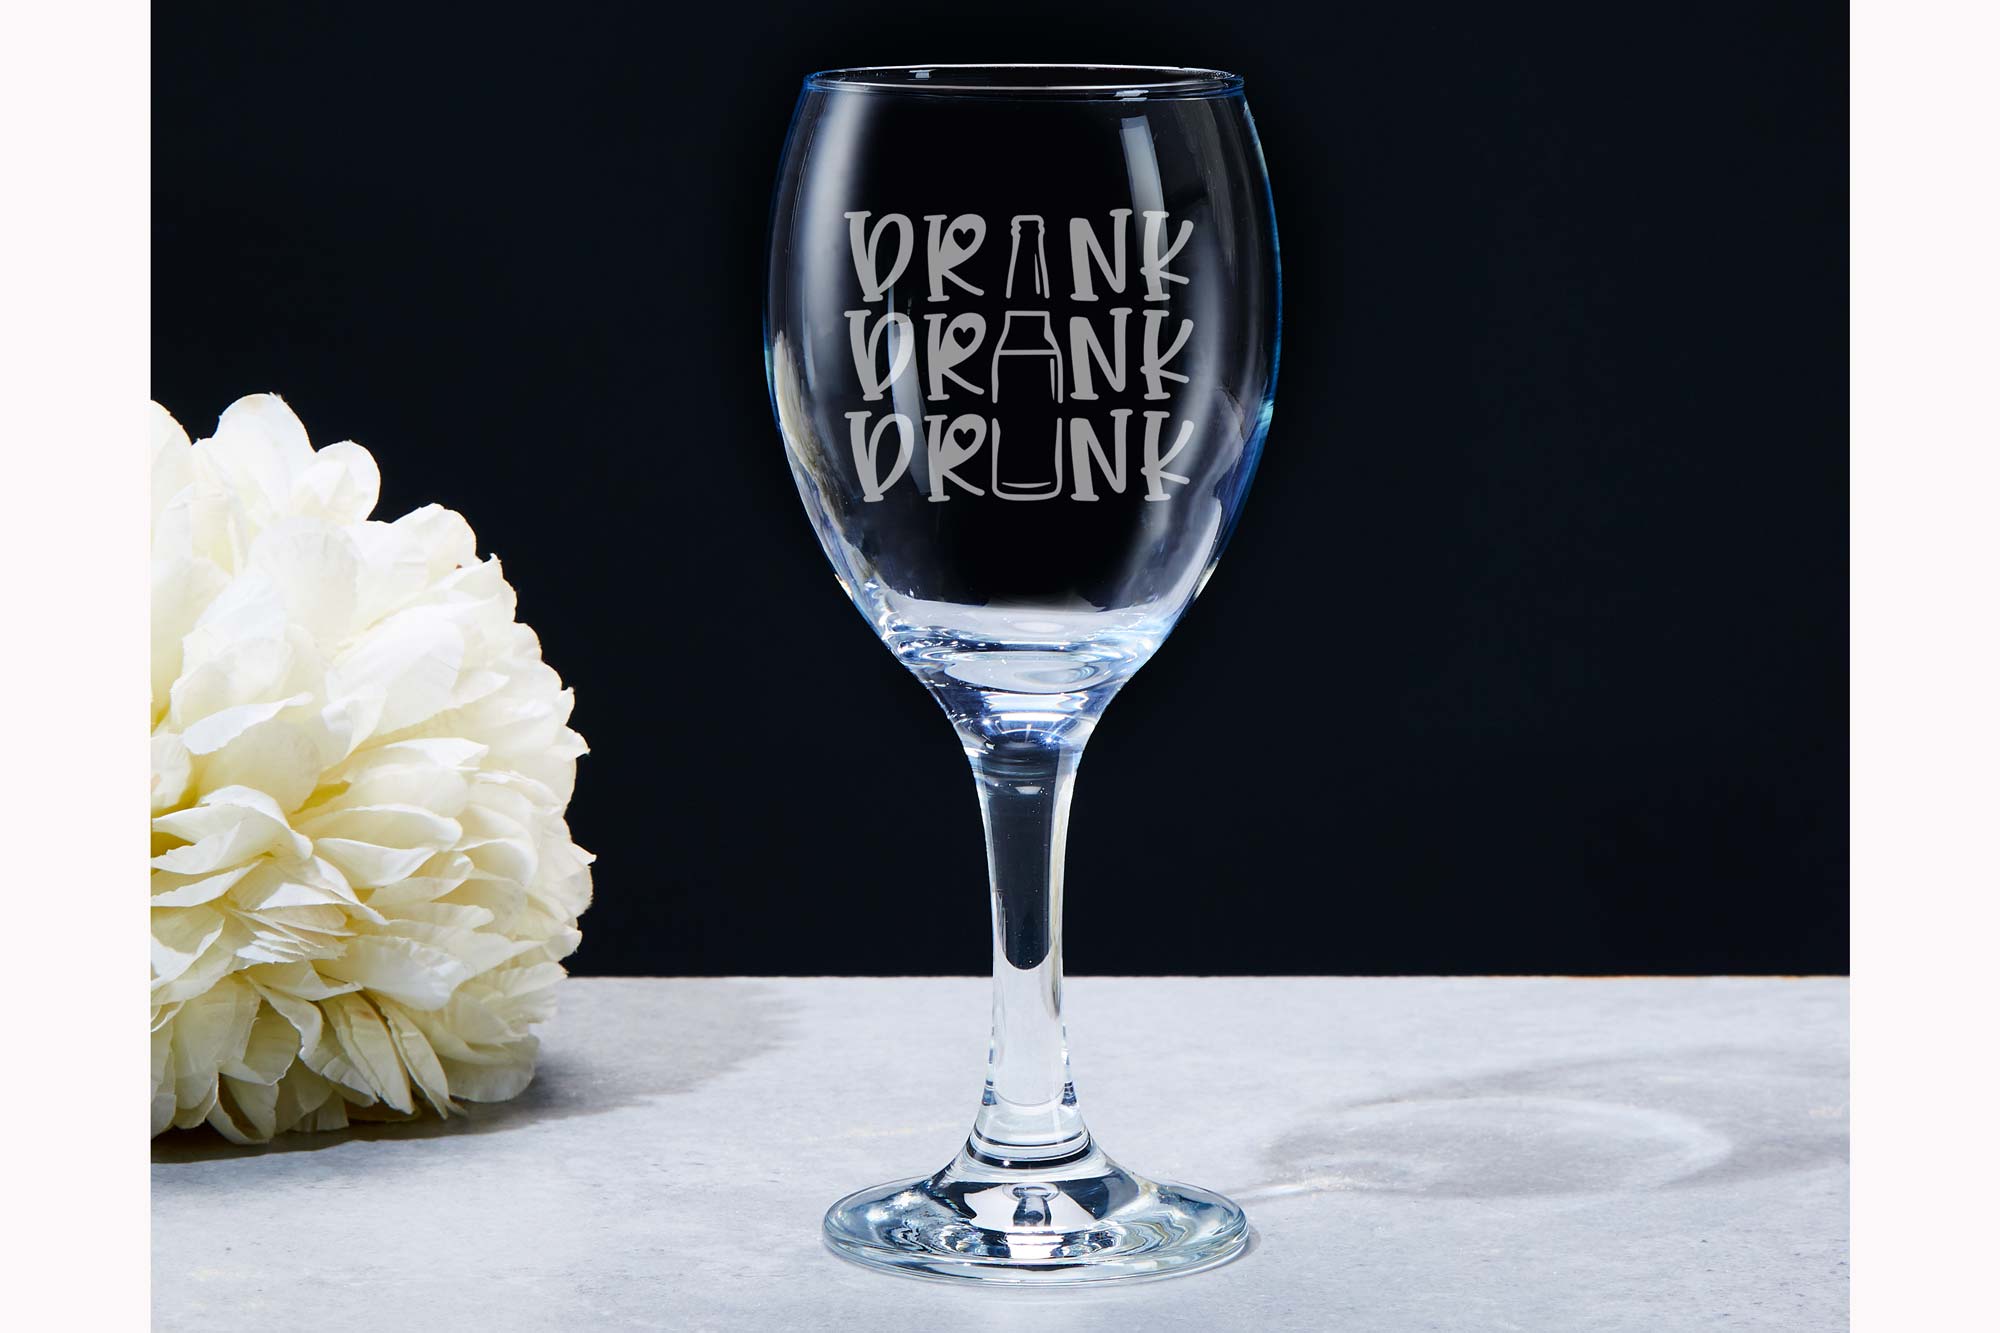 Drink Drank Drunk Wine Glass